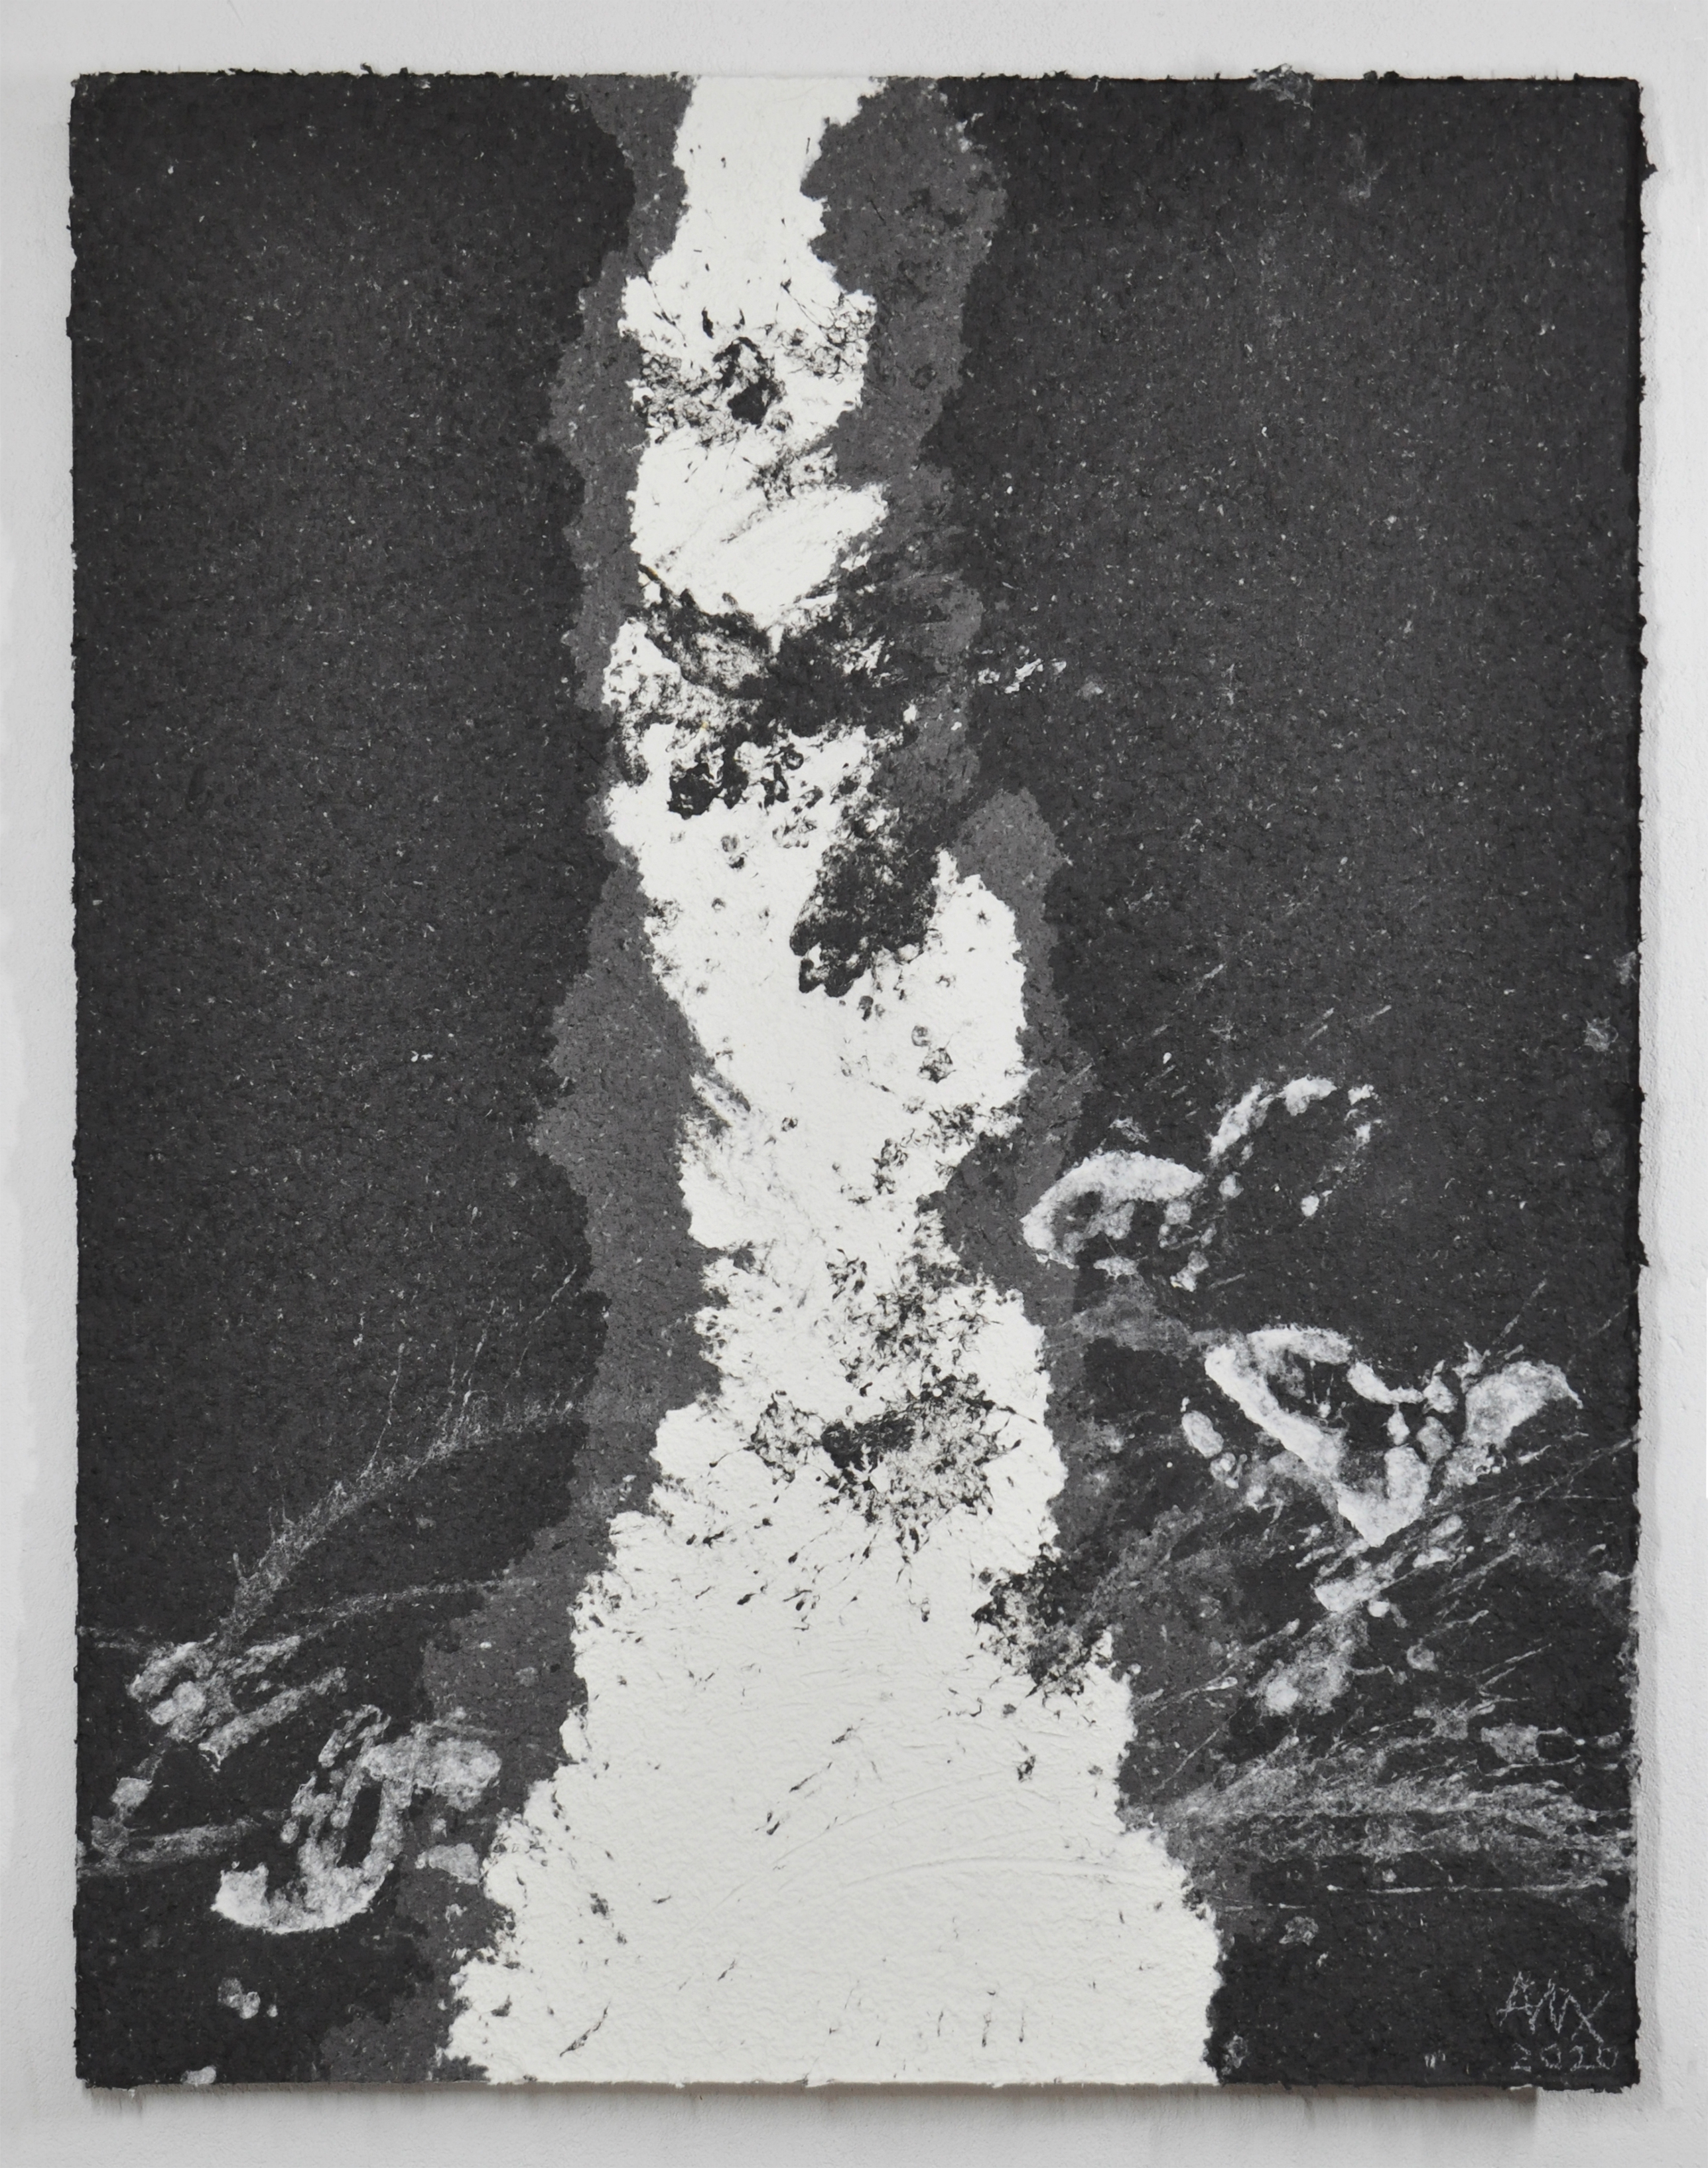 1_Anke Meixner, Bedrohung, 2020, Papierpulpe und Pigment, 132 x 104 cm.jpg